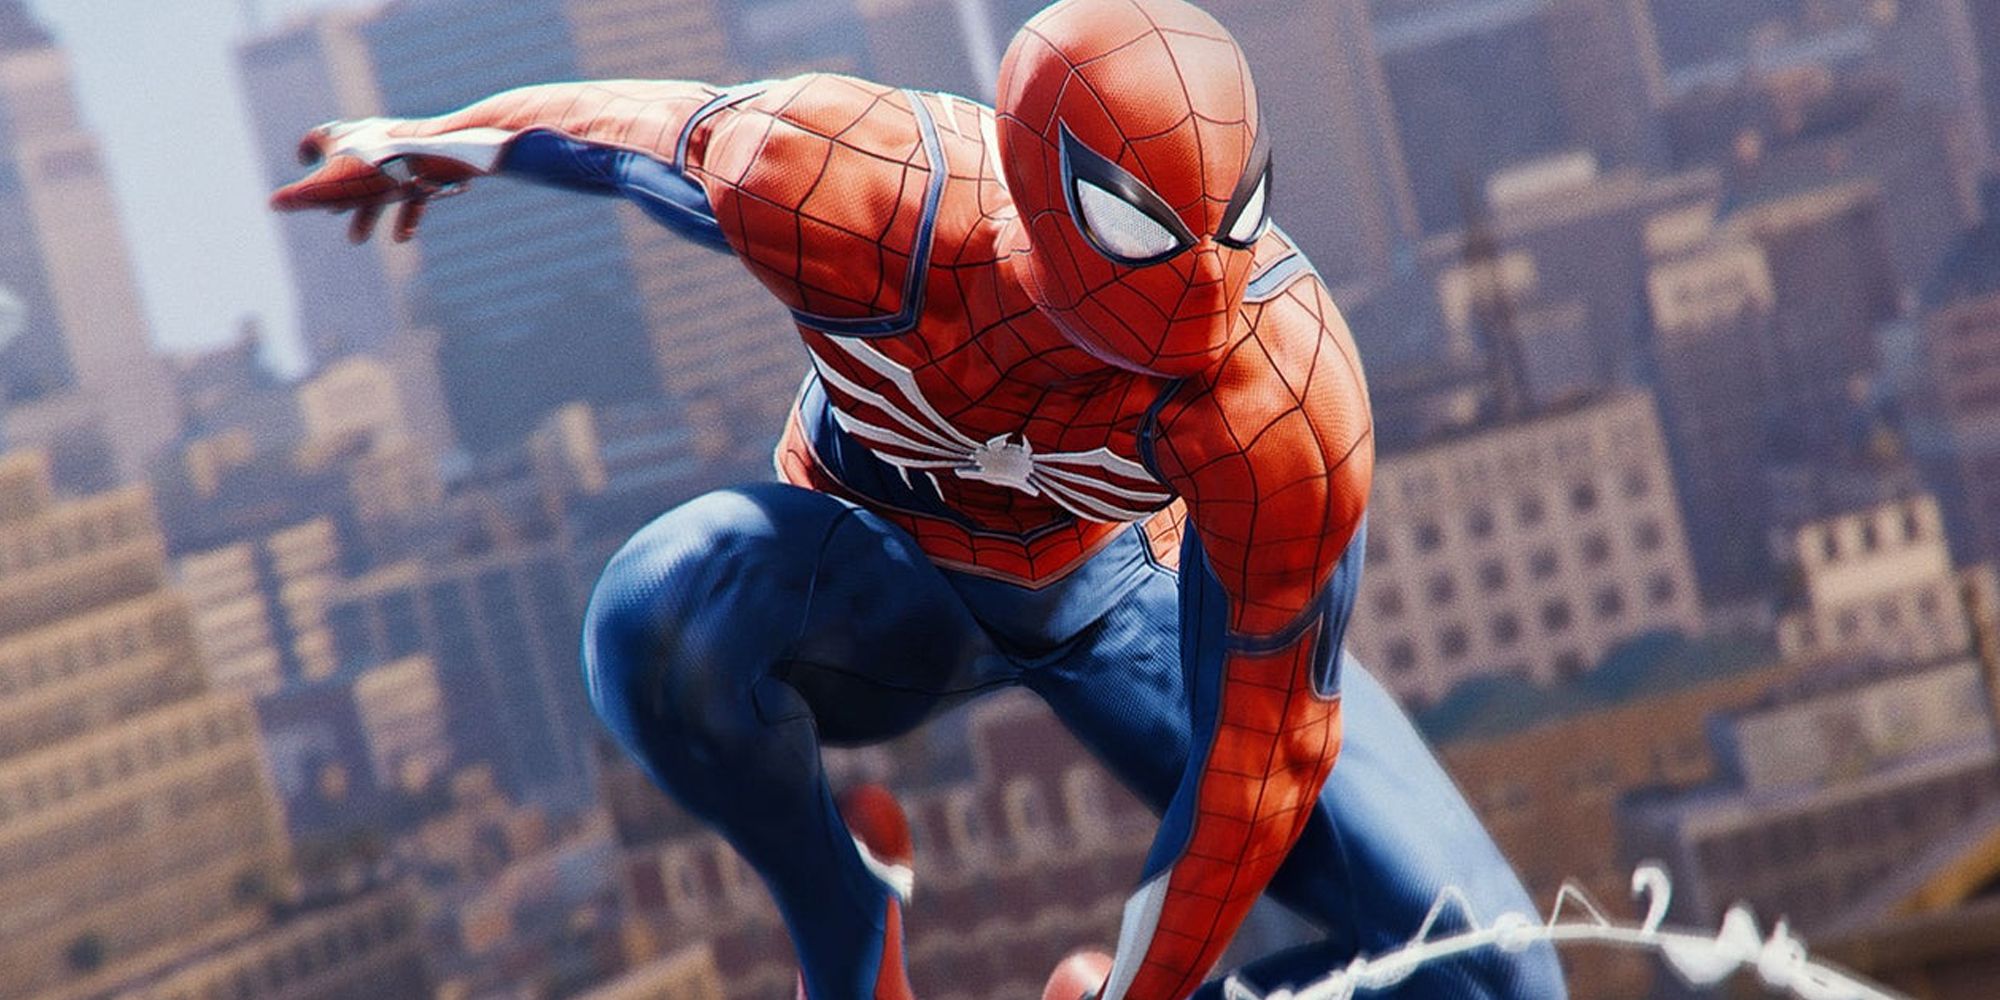 Spider-Man running around New York City on the remastered PS5